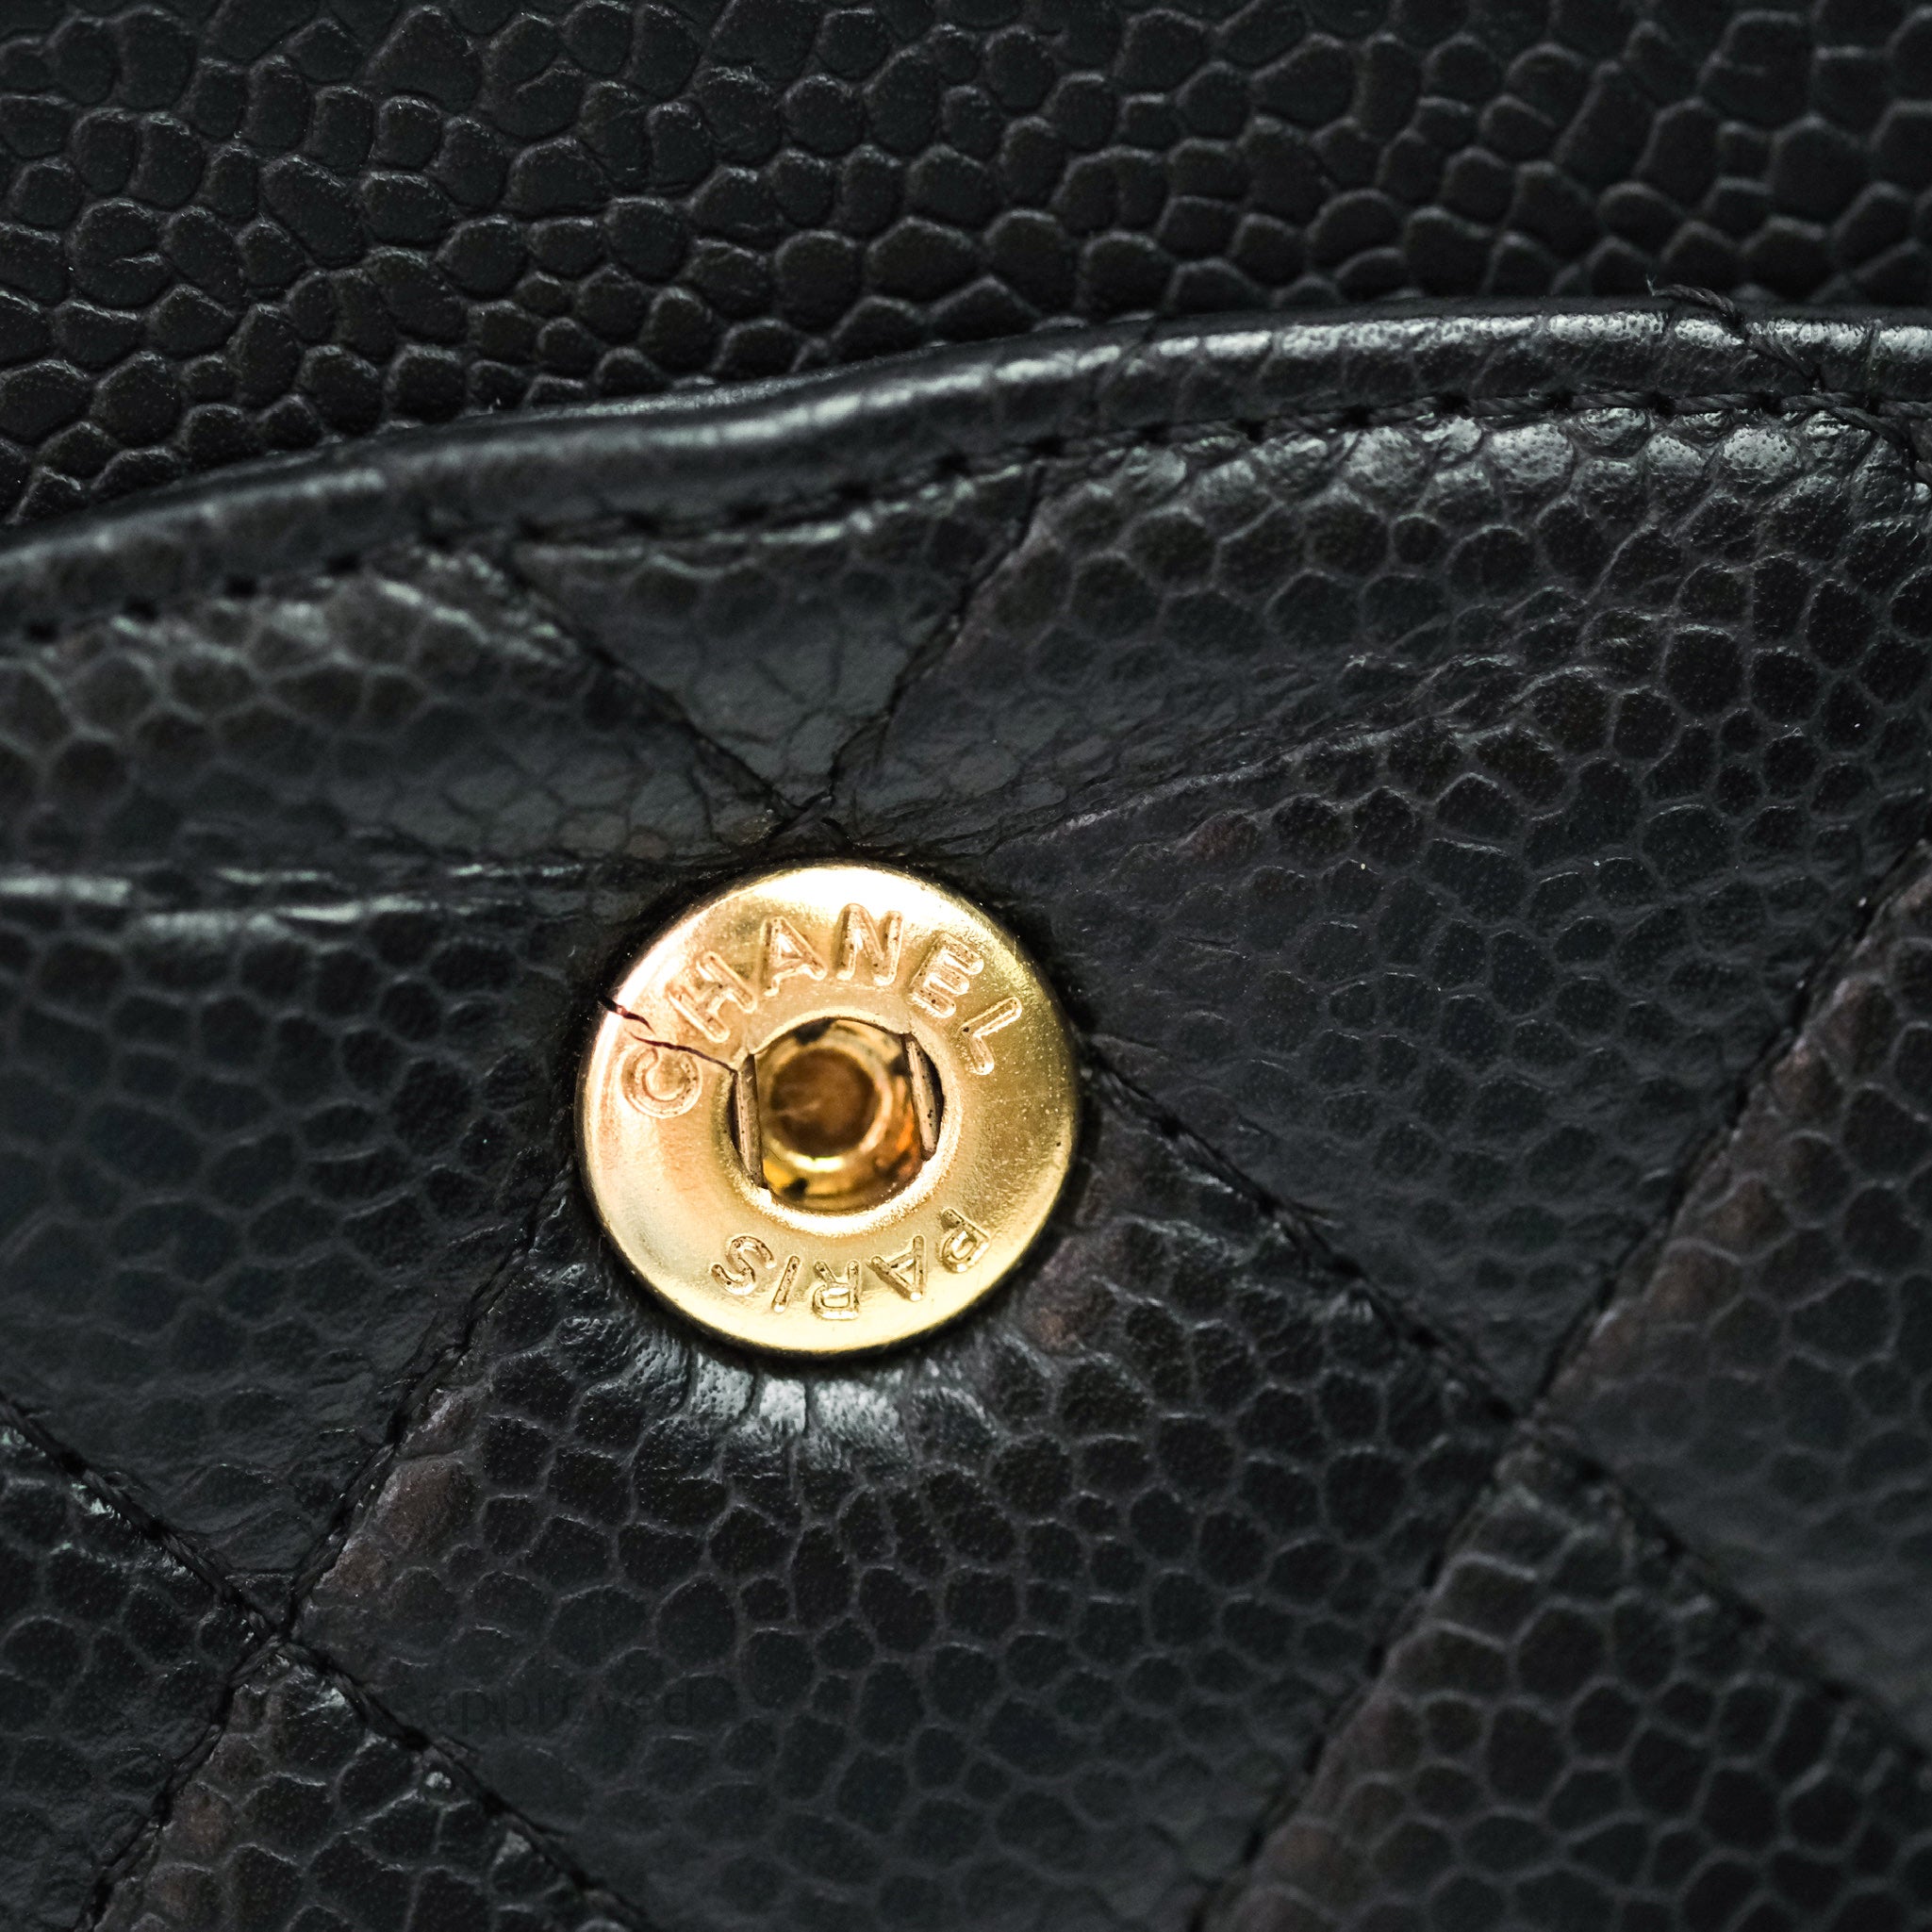 Chanel Gold Caviar Classic Double Flap Medium Q6B0100FD0003